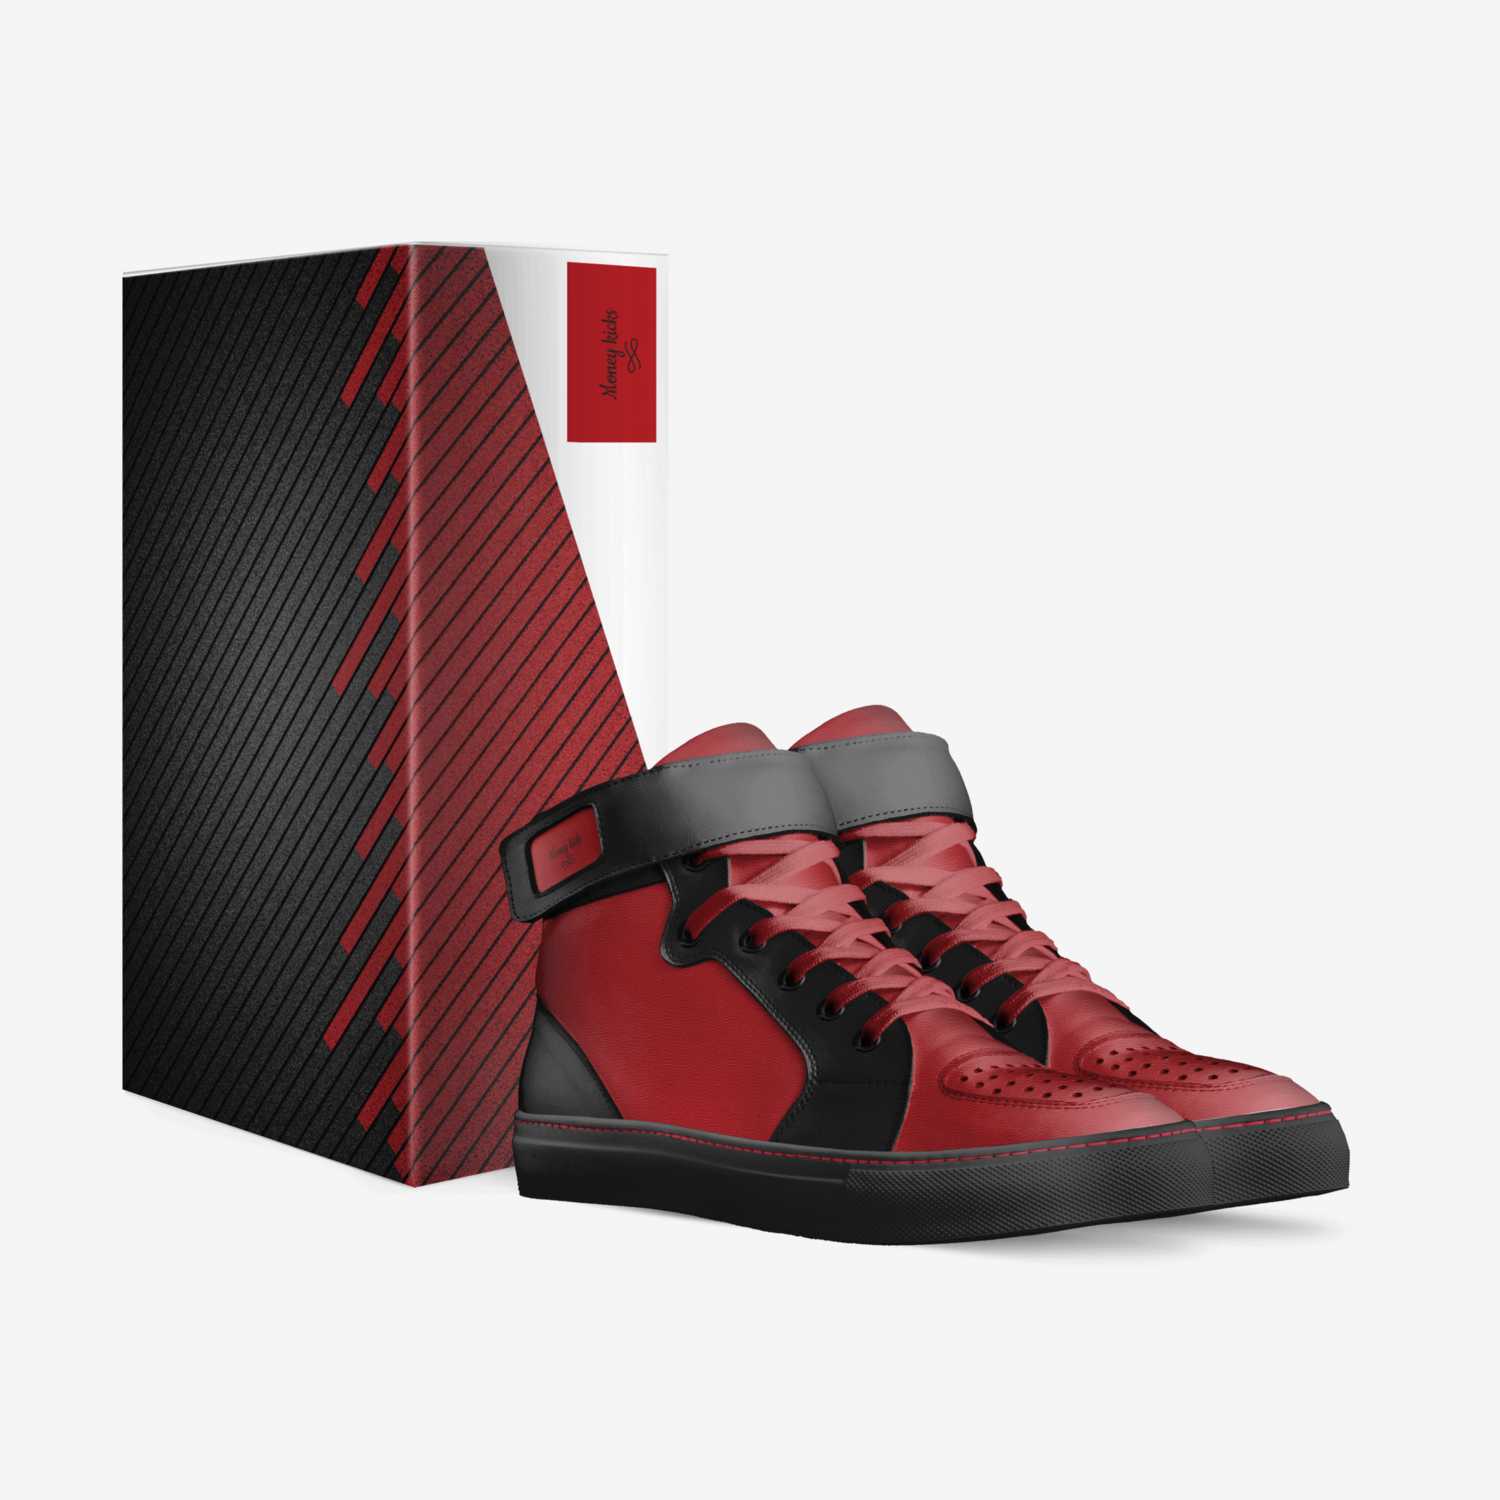 Money kicks custom made in Italy shoes by Josiah | Box view